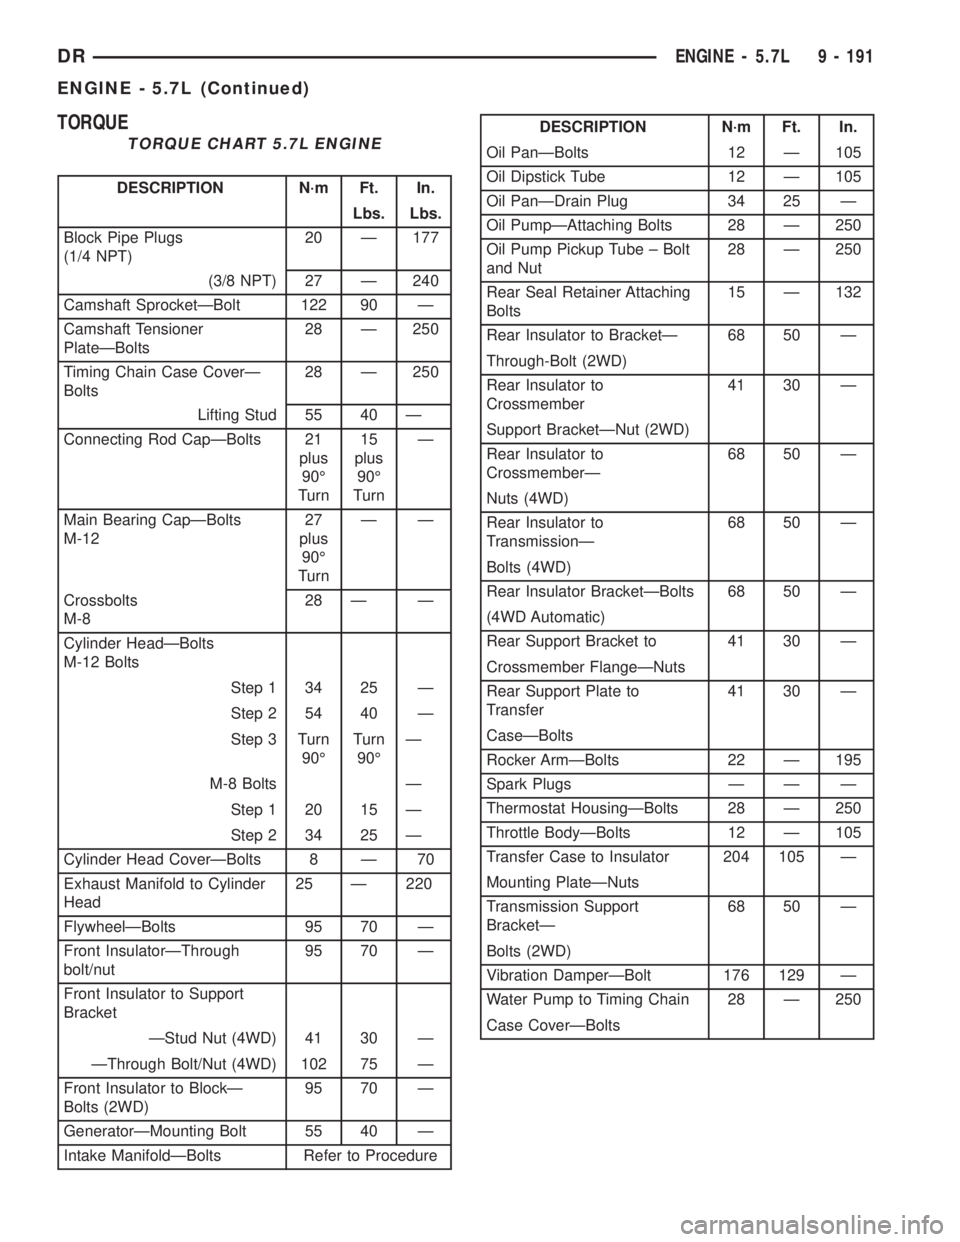 DODGE RAM 2003  Service Owners Guide TORQUE
TORQUE CHART 5.7L ENGINE
DESCRIPTION N´m Ft. In.
Lbs. Lbs.
Block Pipe Plugs
(1/4 NPT)20 Ð 177
(3/8 NPT) 27 Ð 240
Camshaft SprocketÐBolt 122 90 Ð
Camshaft Tensioner
PlateÐBolts28 Ð 250
Ti